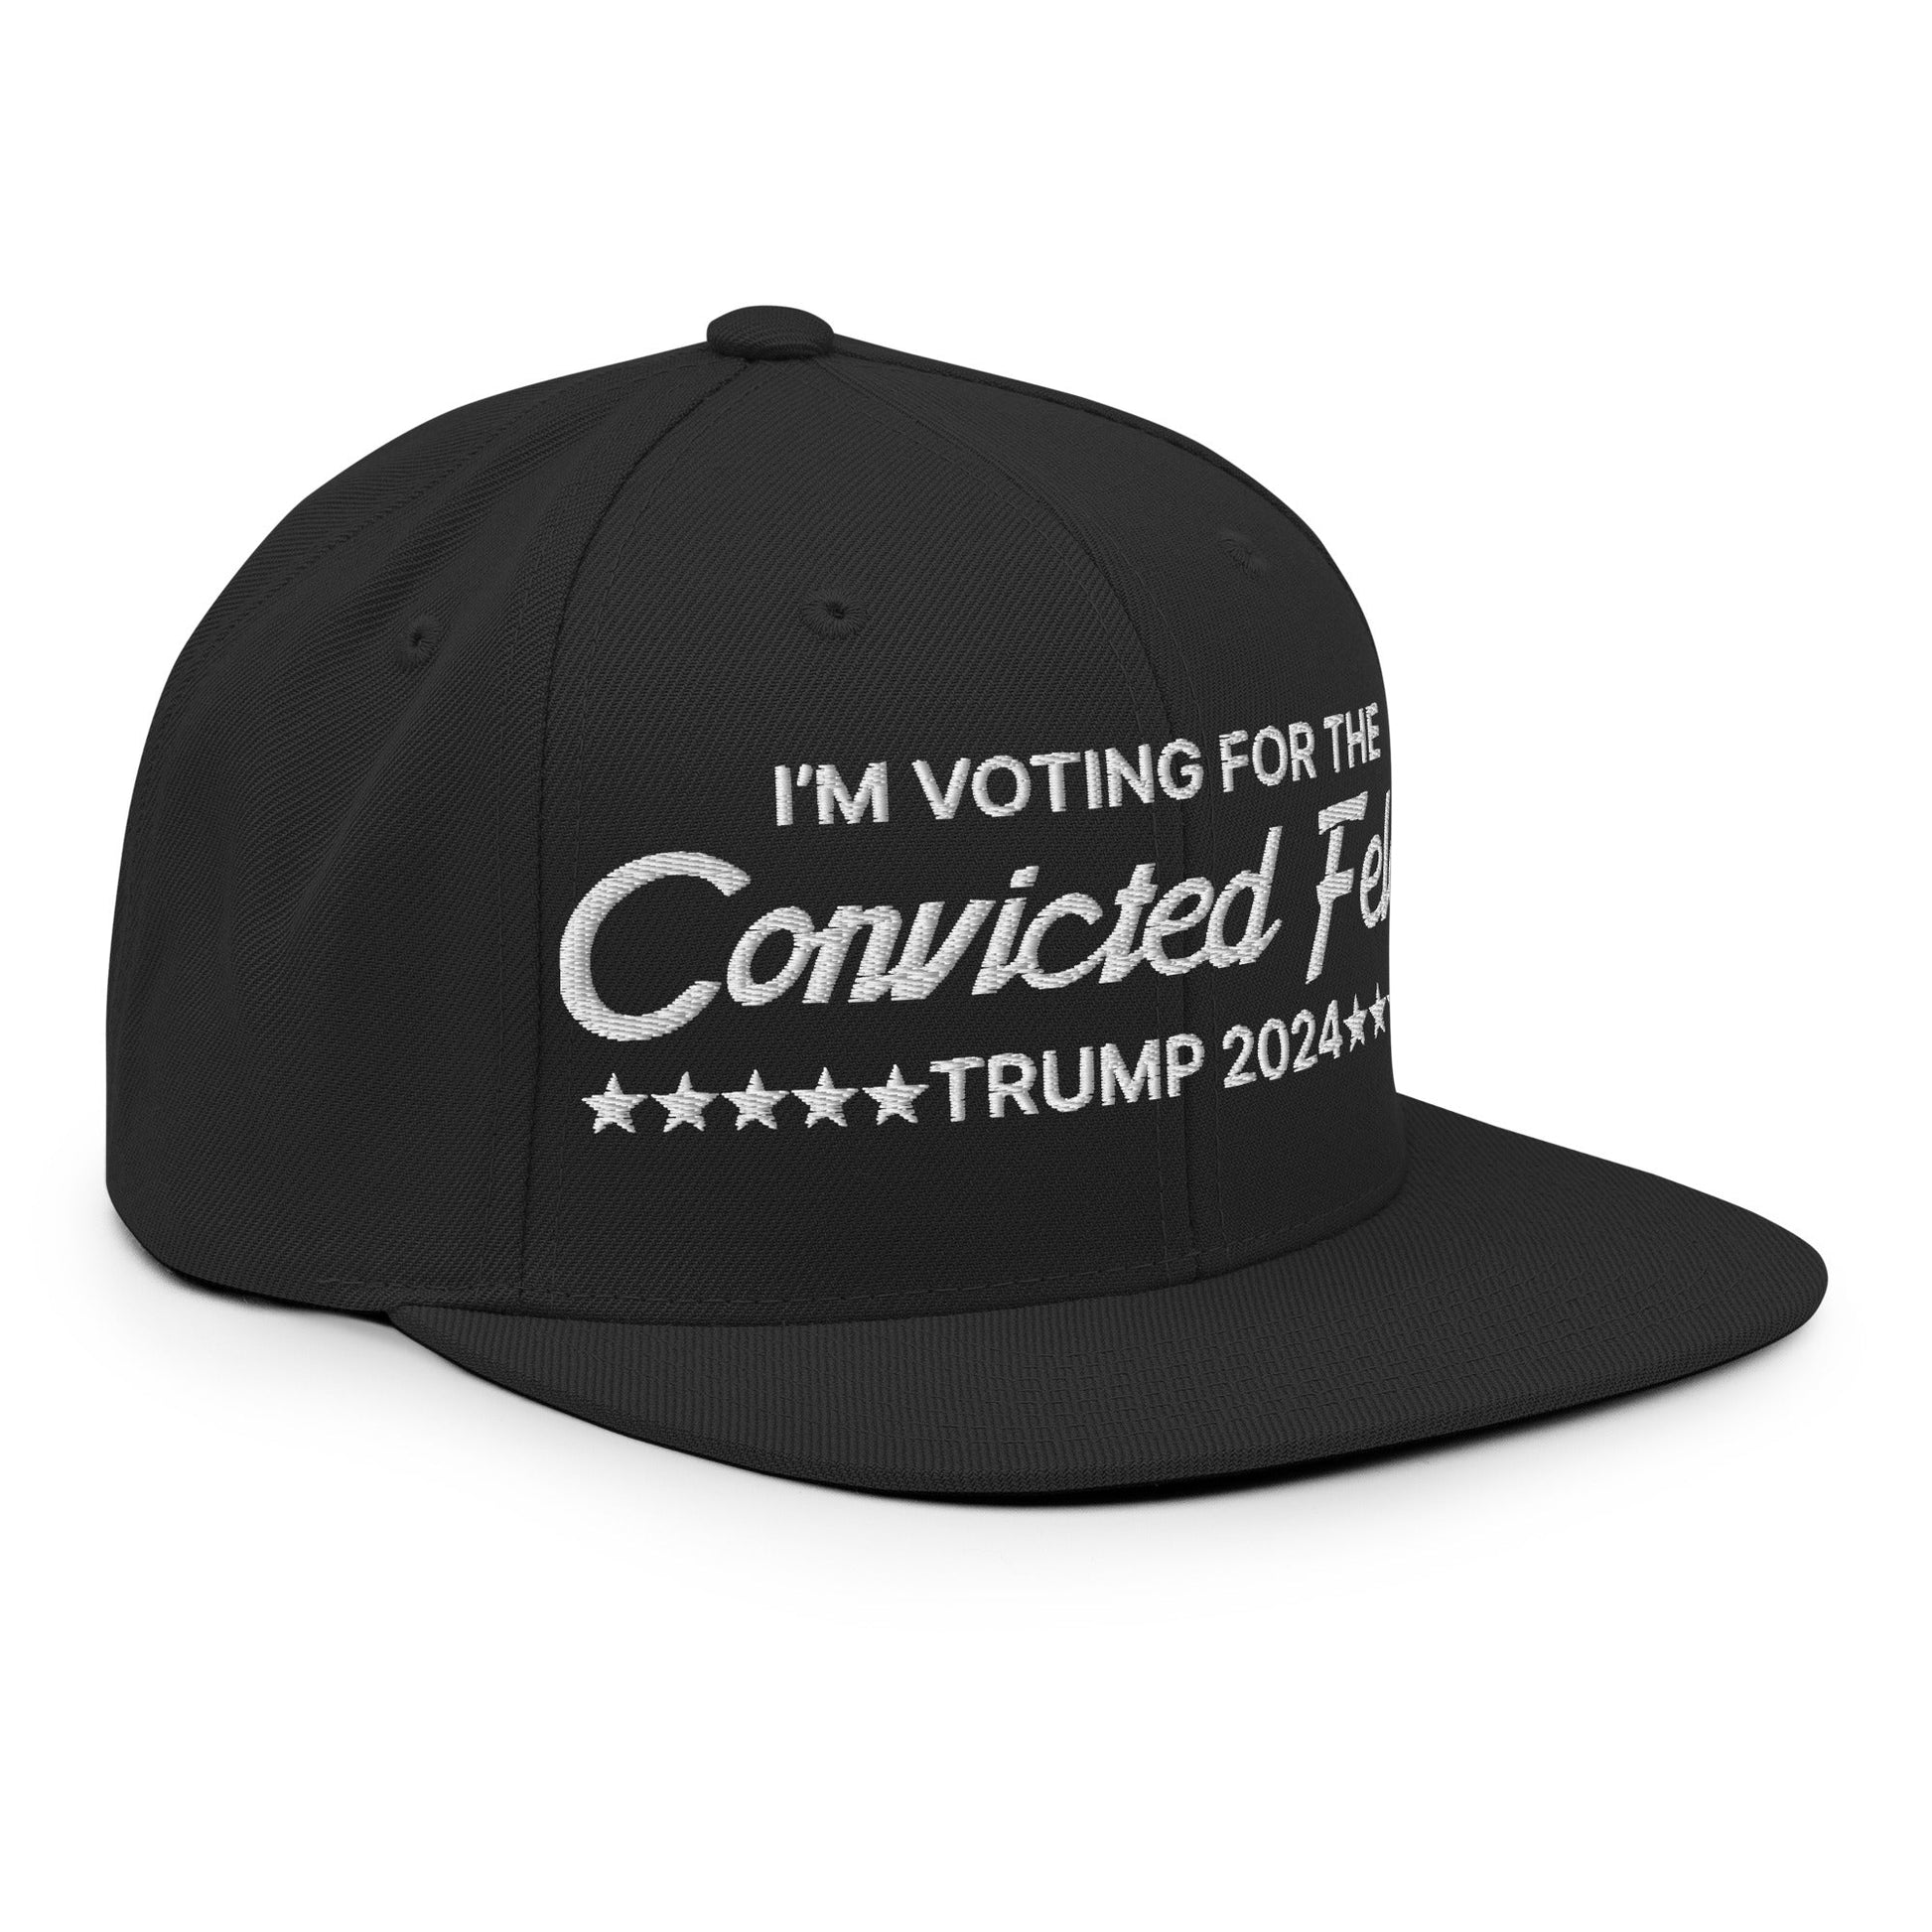 I'm Voting For The Convicted Felon Trump 2024 Snapback Hat Black